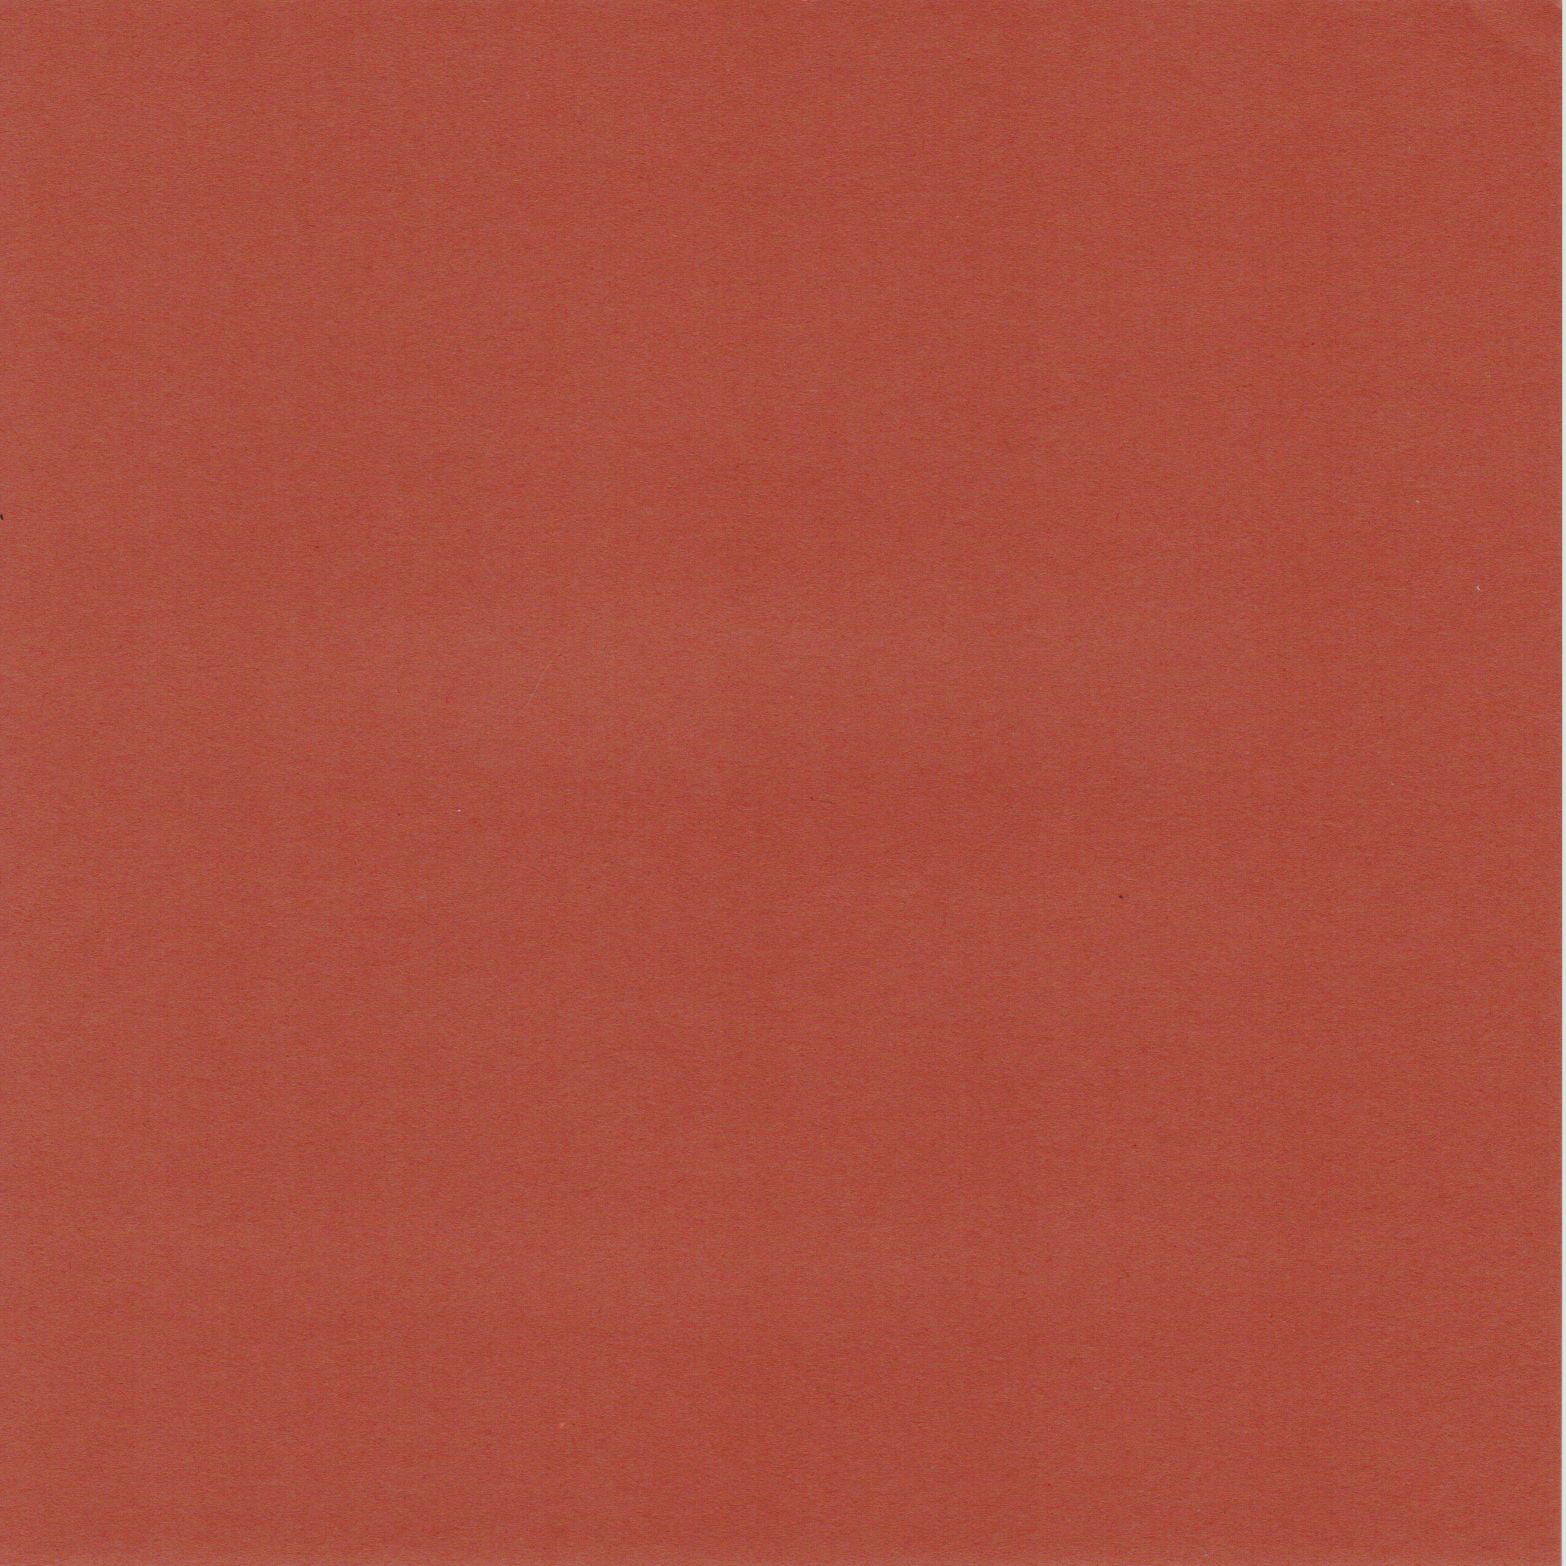 Red Vivid Color Permanent Paper - 8.5 x 11 - Filmsource